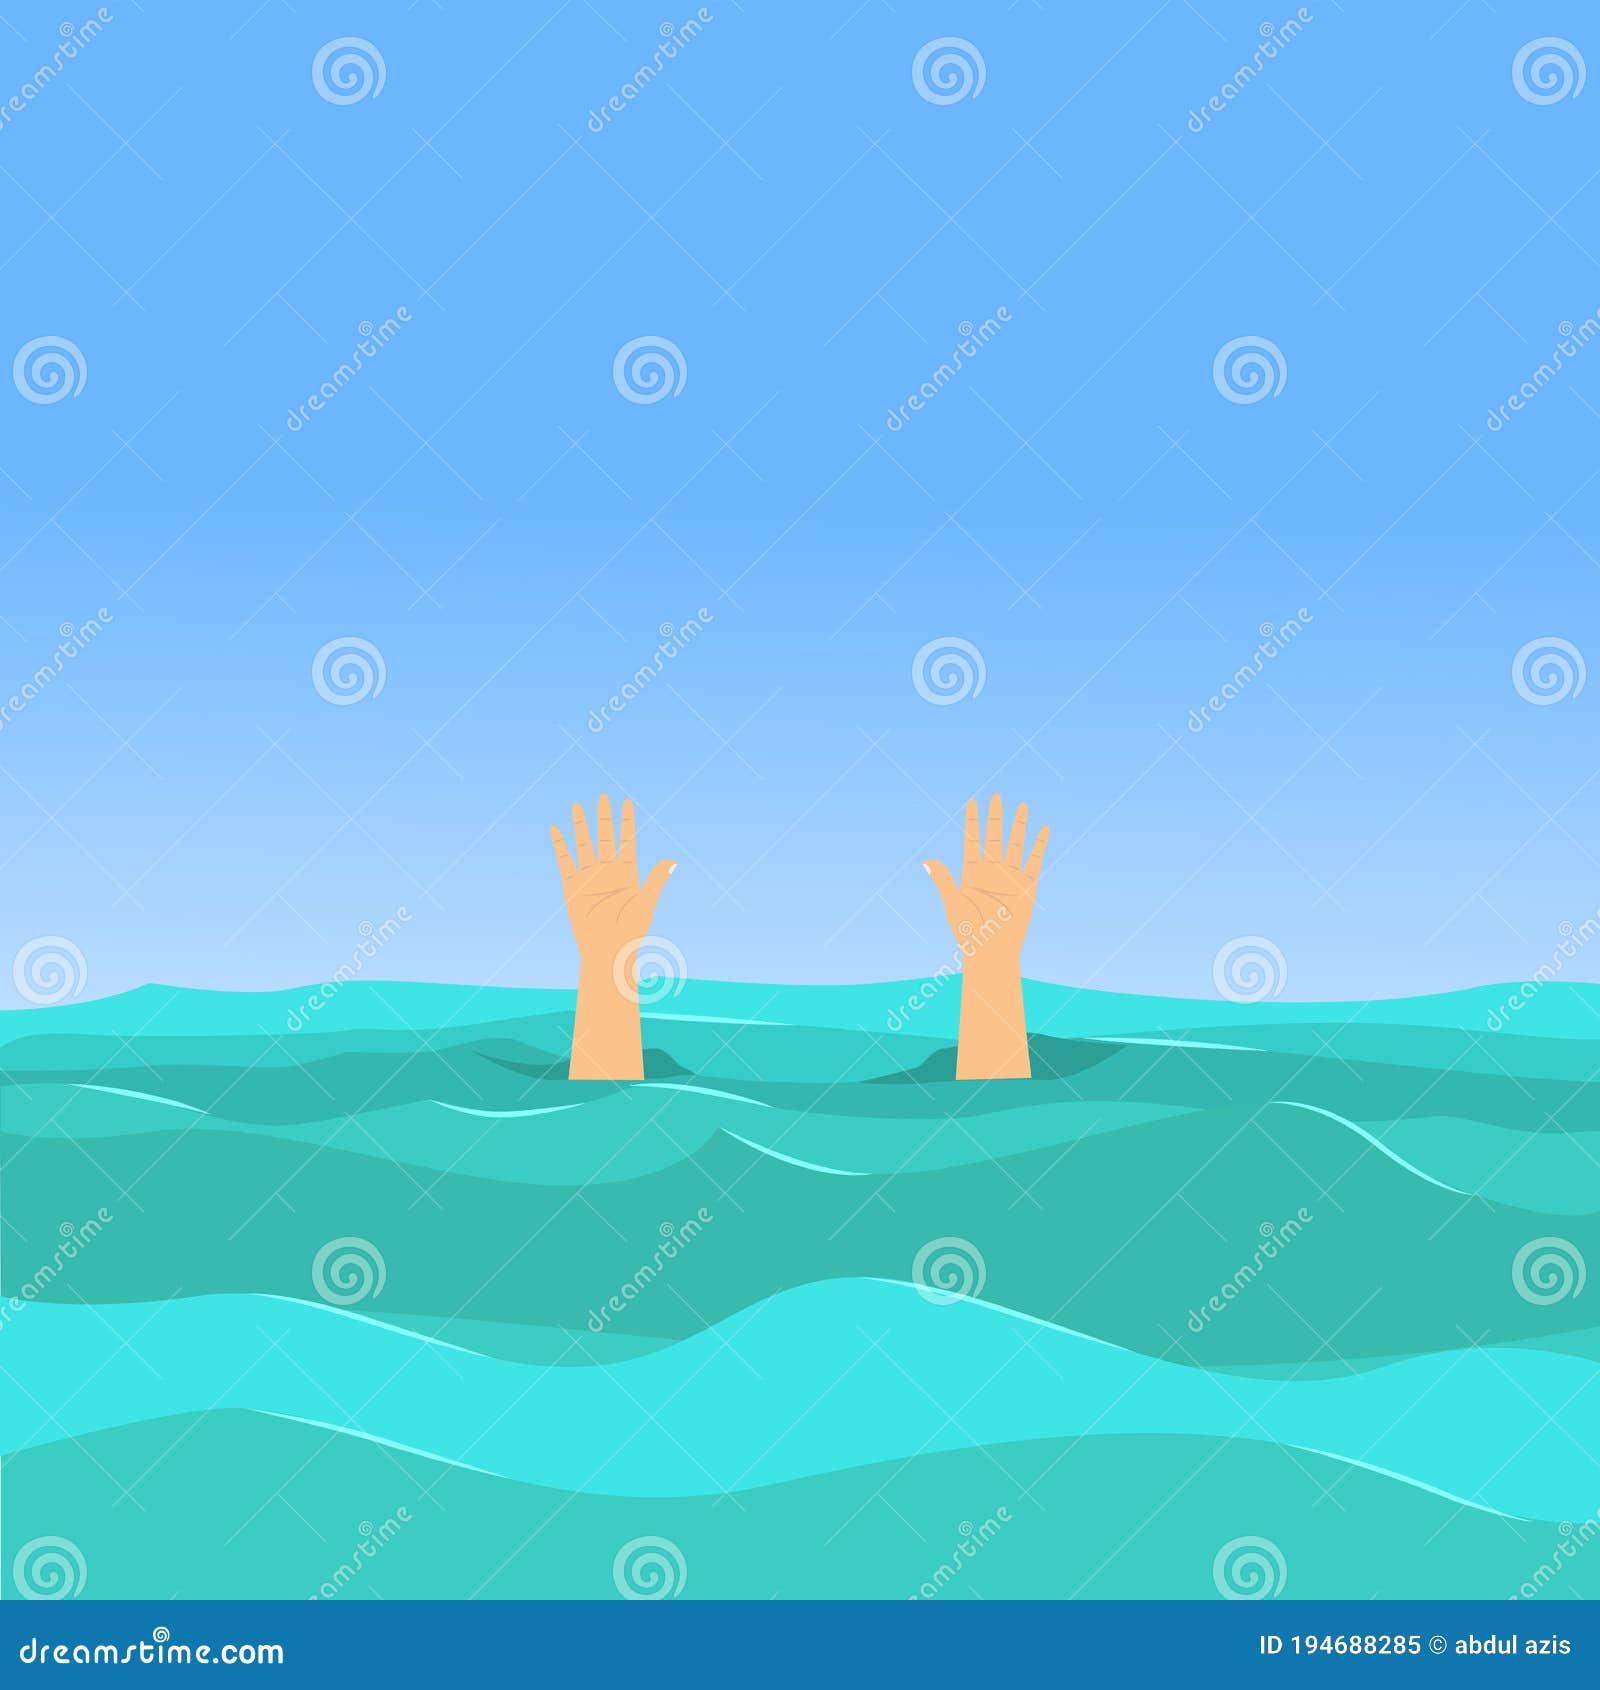 Illustration of a Man Drowning at Sea, Flat Design Vector Stock Vector ...